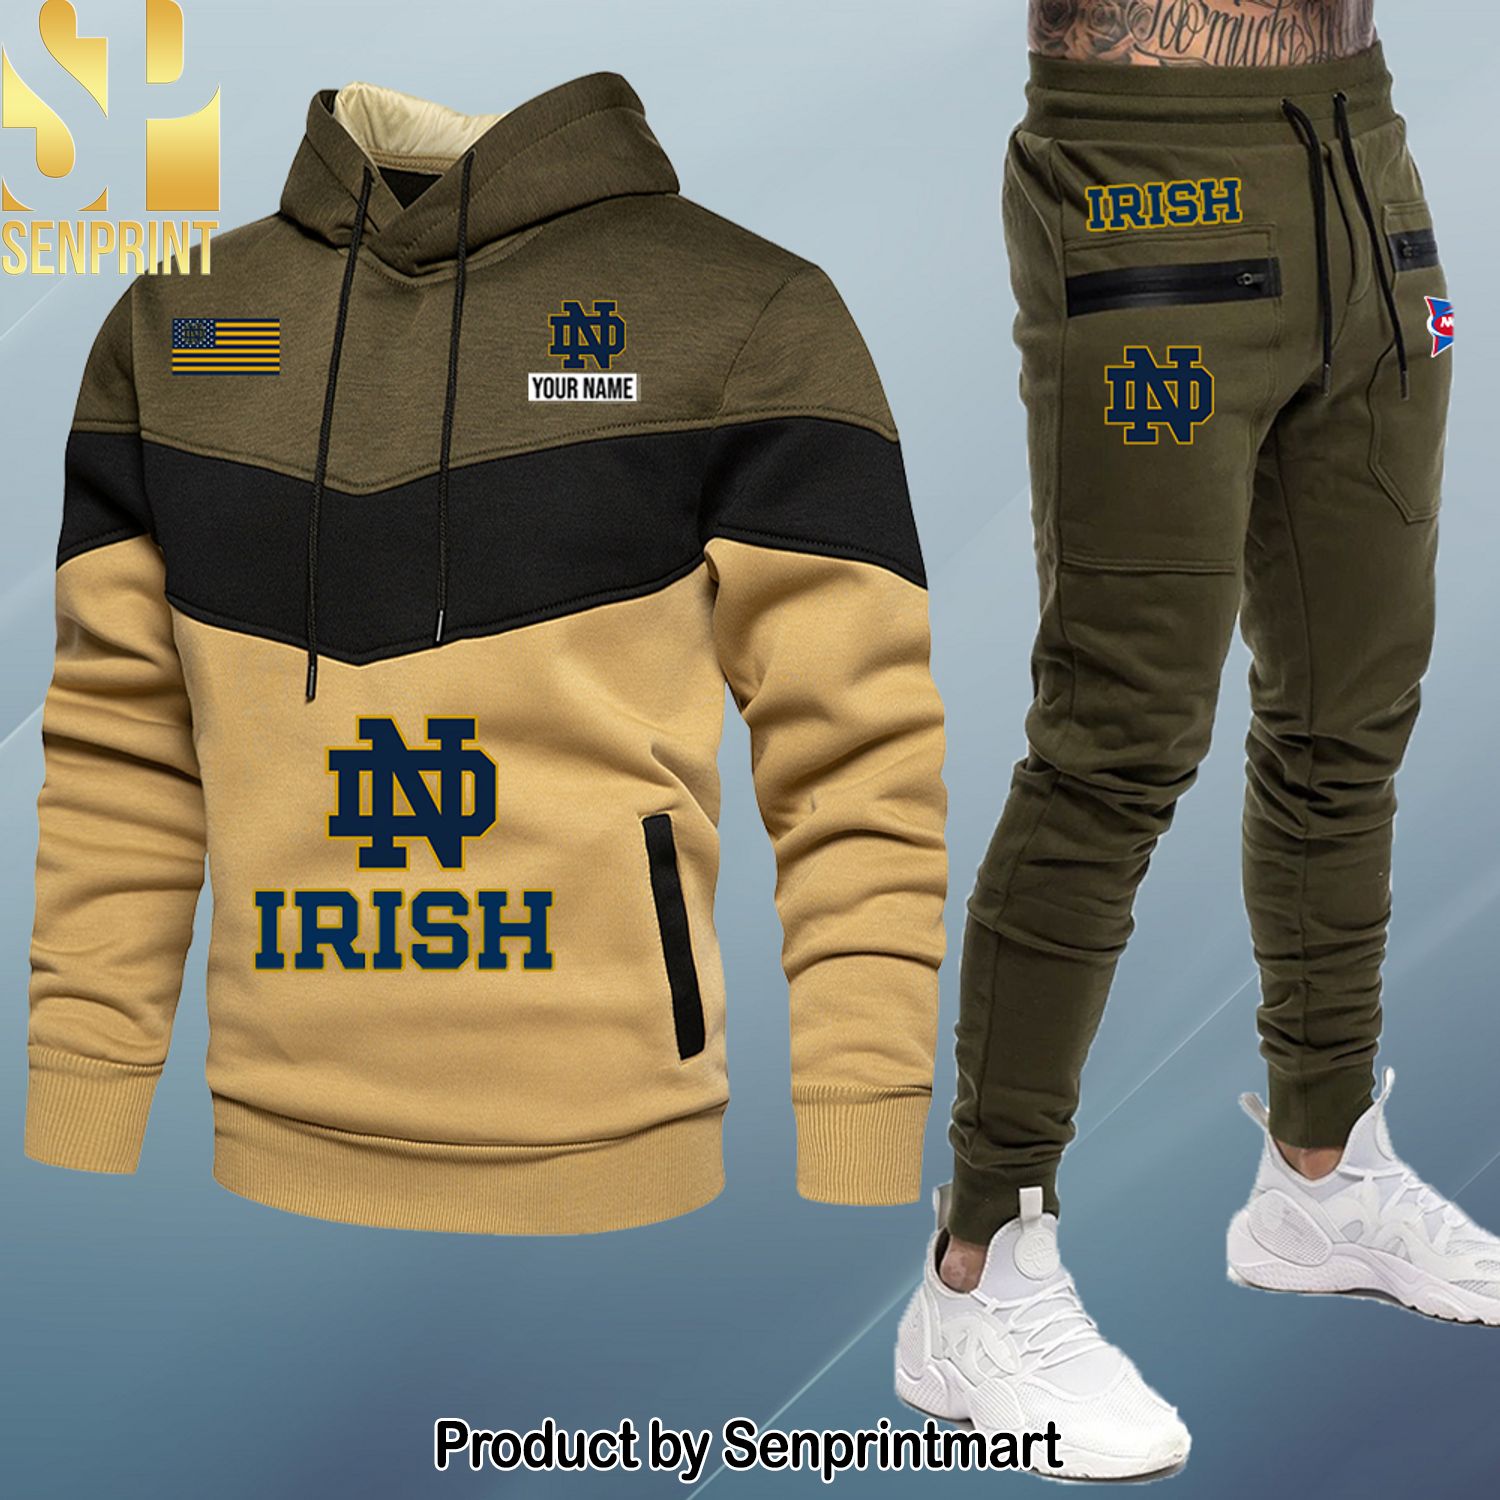 Notre Dame Fighting Irish Full Printing Shirt and Pants